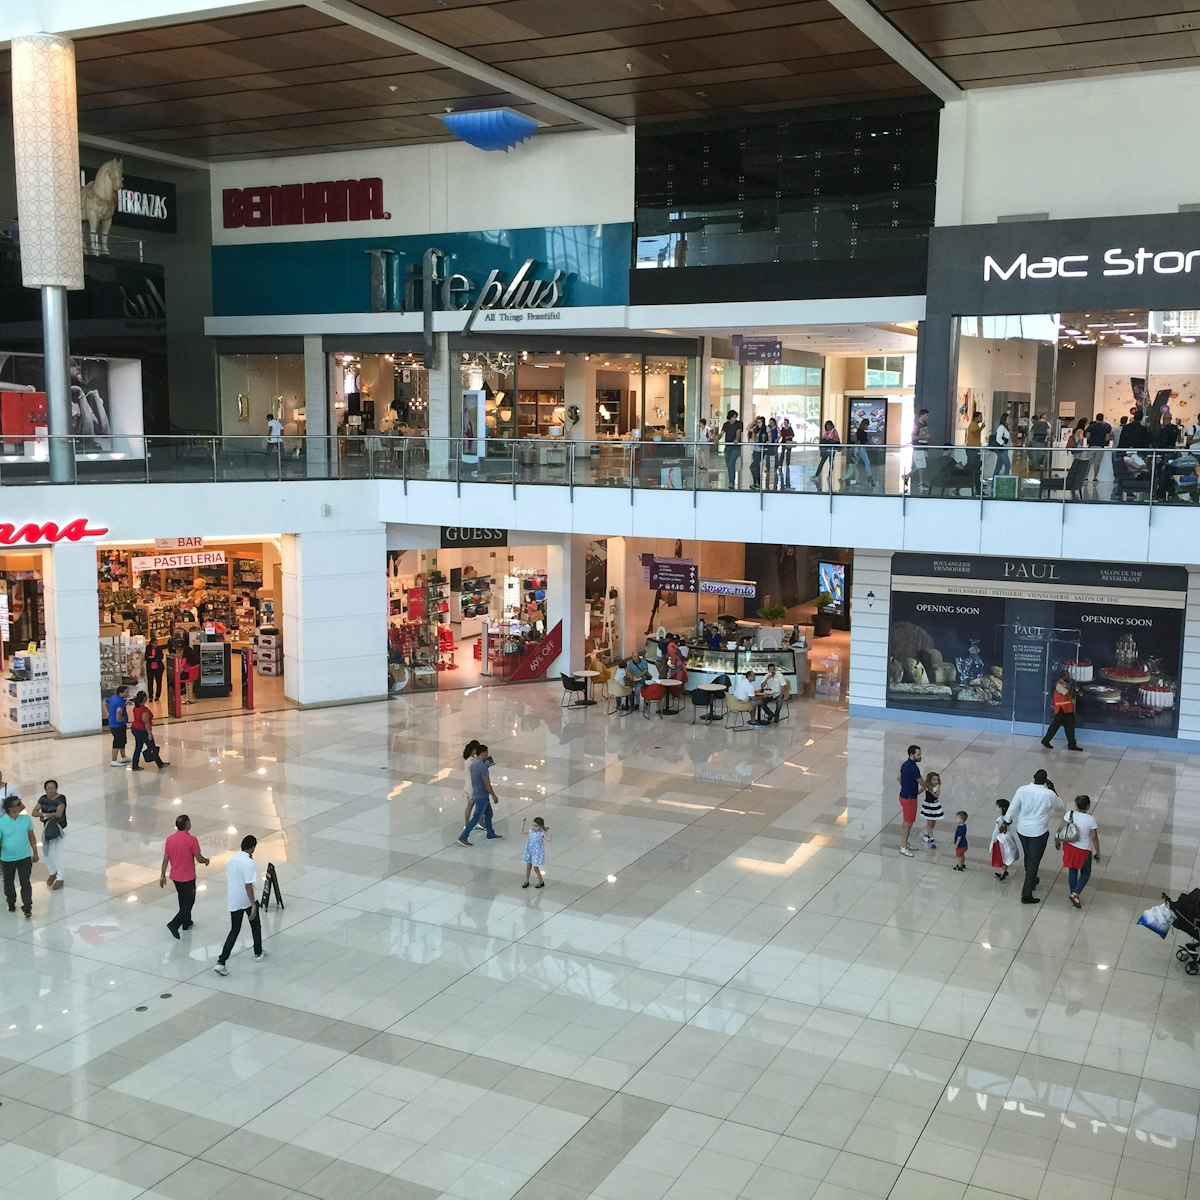 Multiplaza Mall